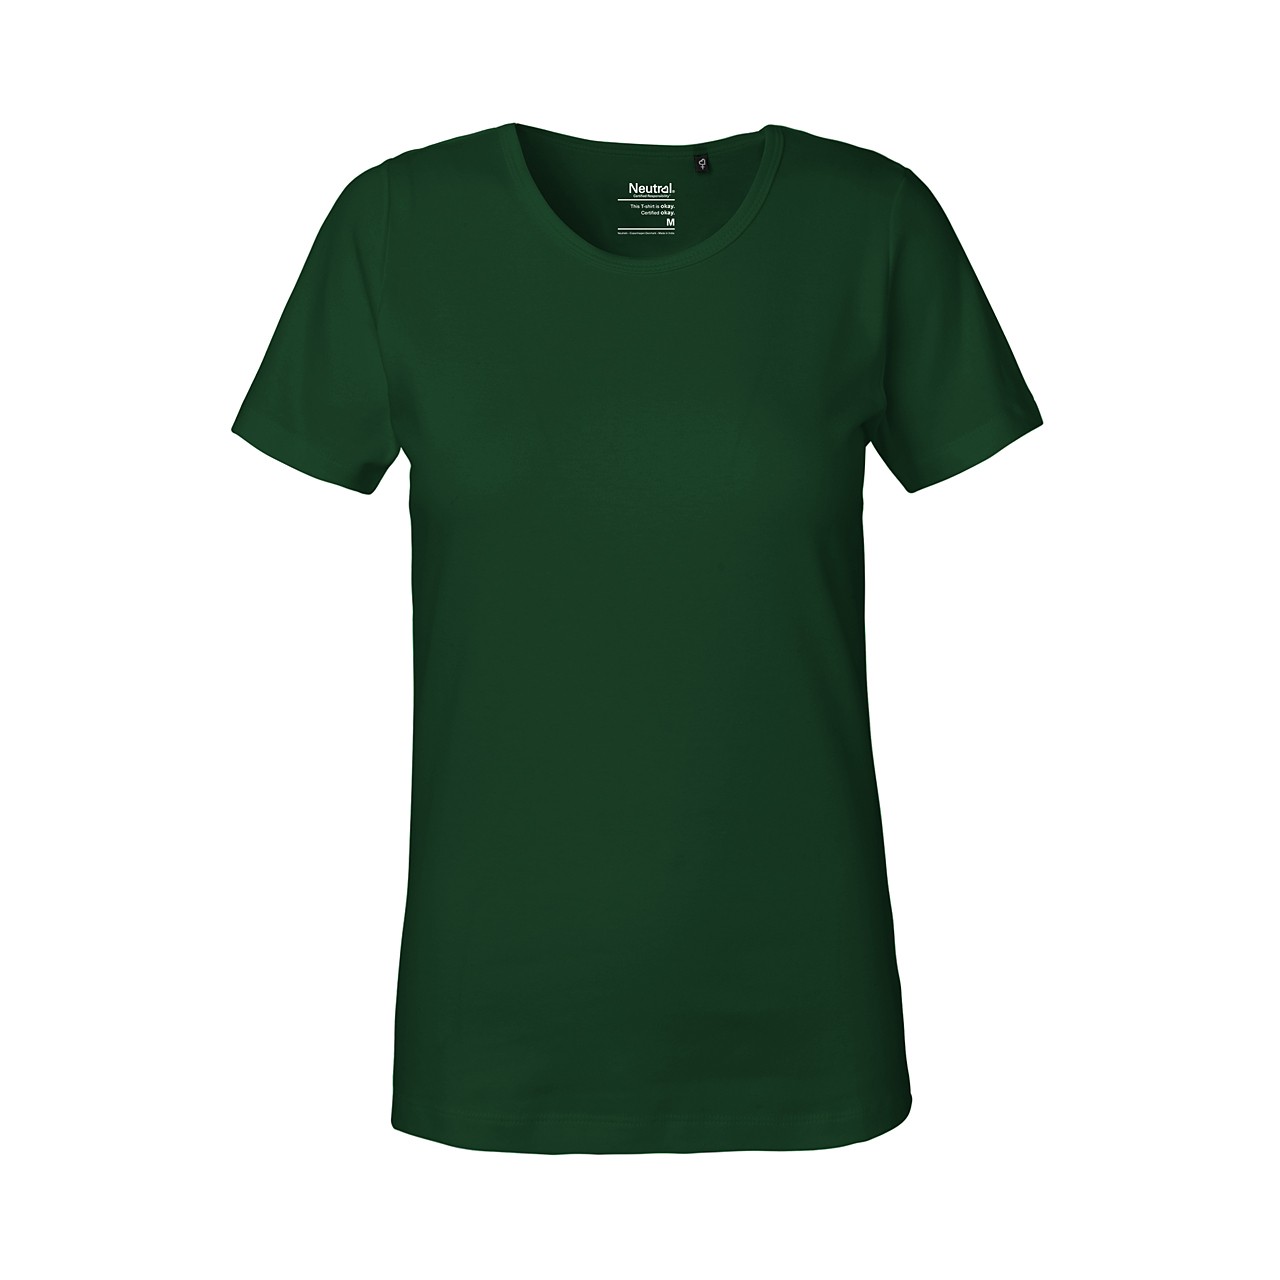 Fairtrade Organic Cotton Ladies Interlock T-Shirt 220 g/m² Neutral®